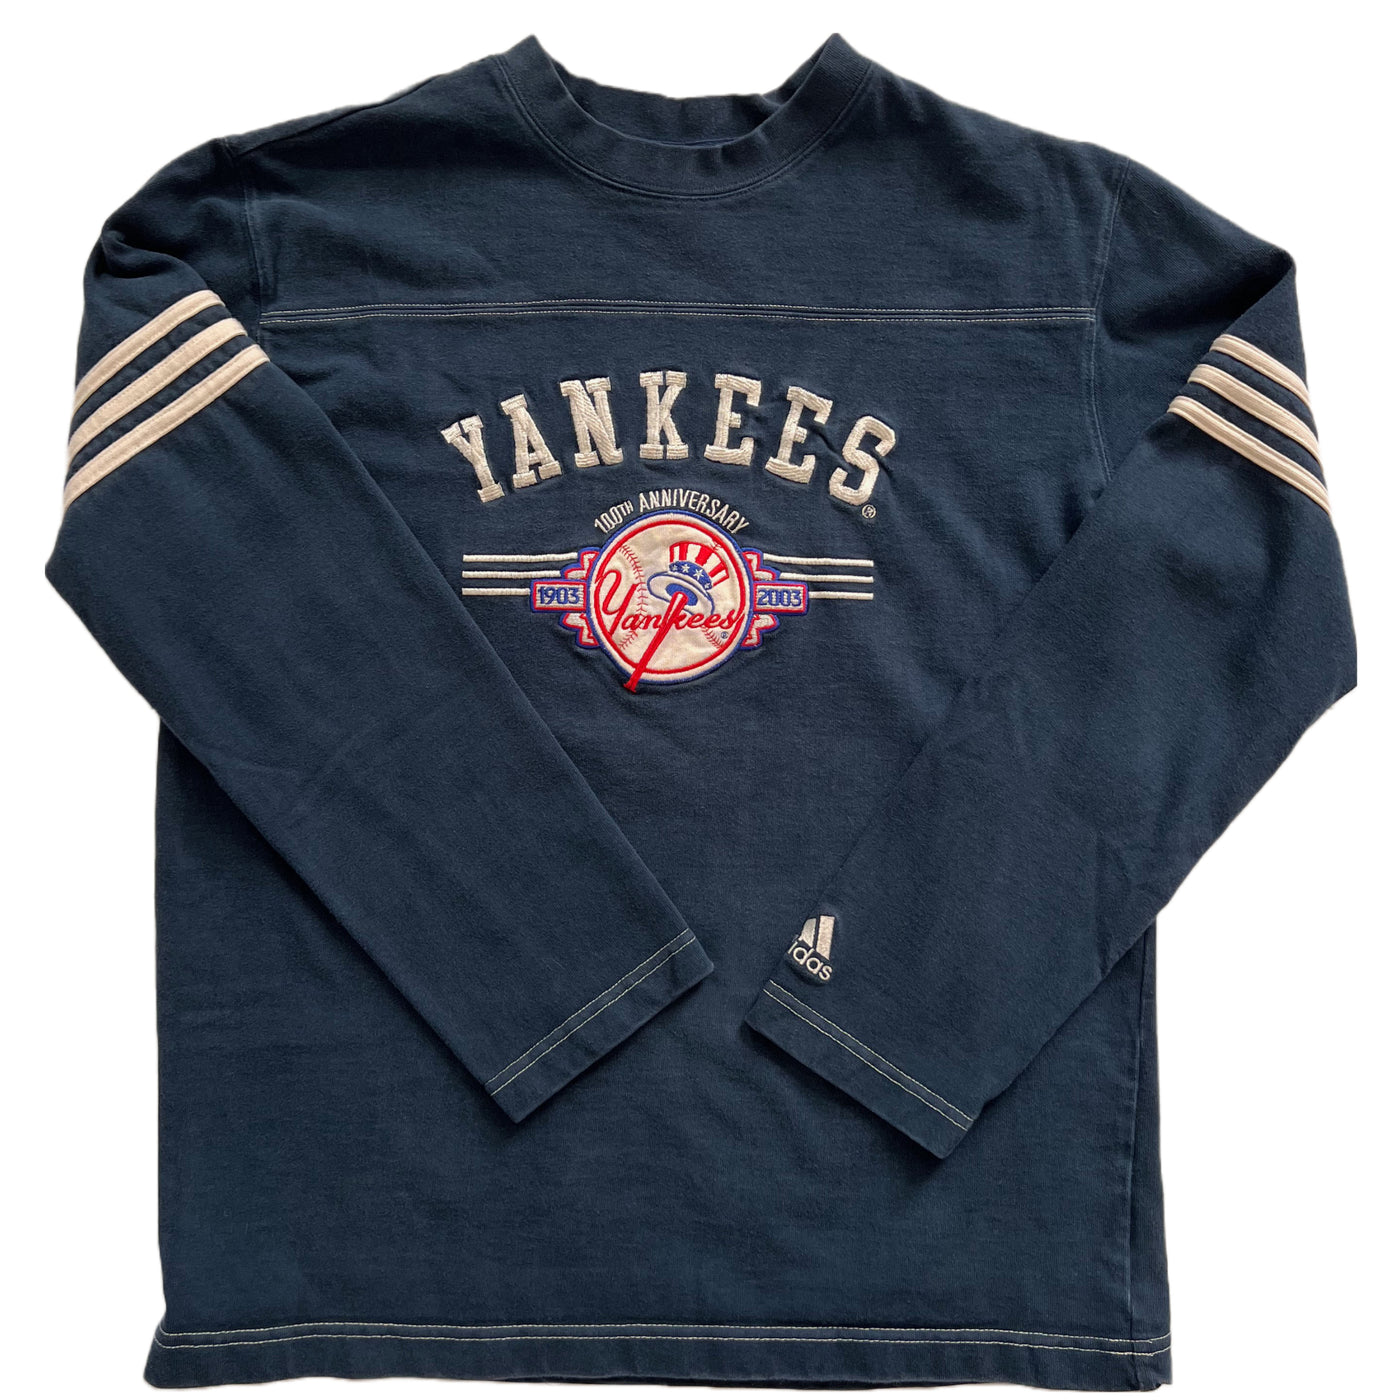 Vintage Adidas Yankees embroidered 100th Anniversary Sweatshirt